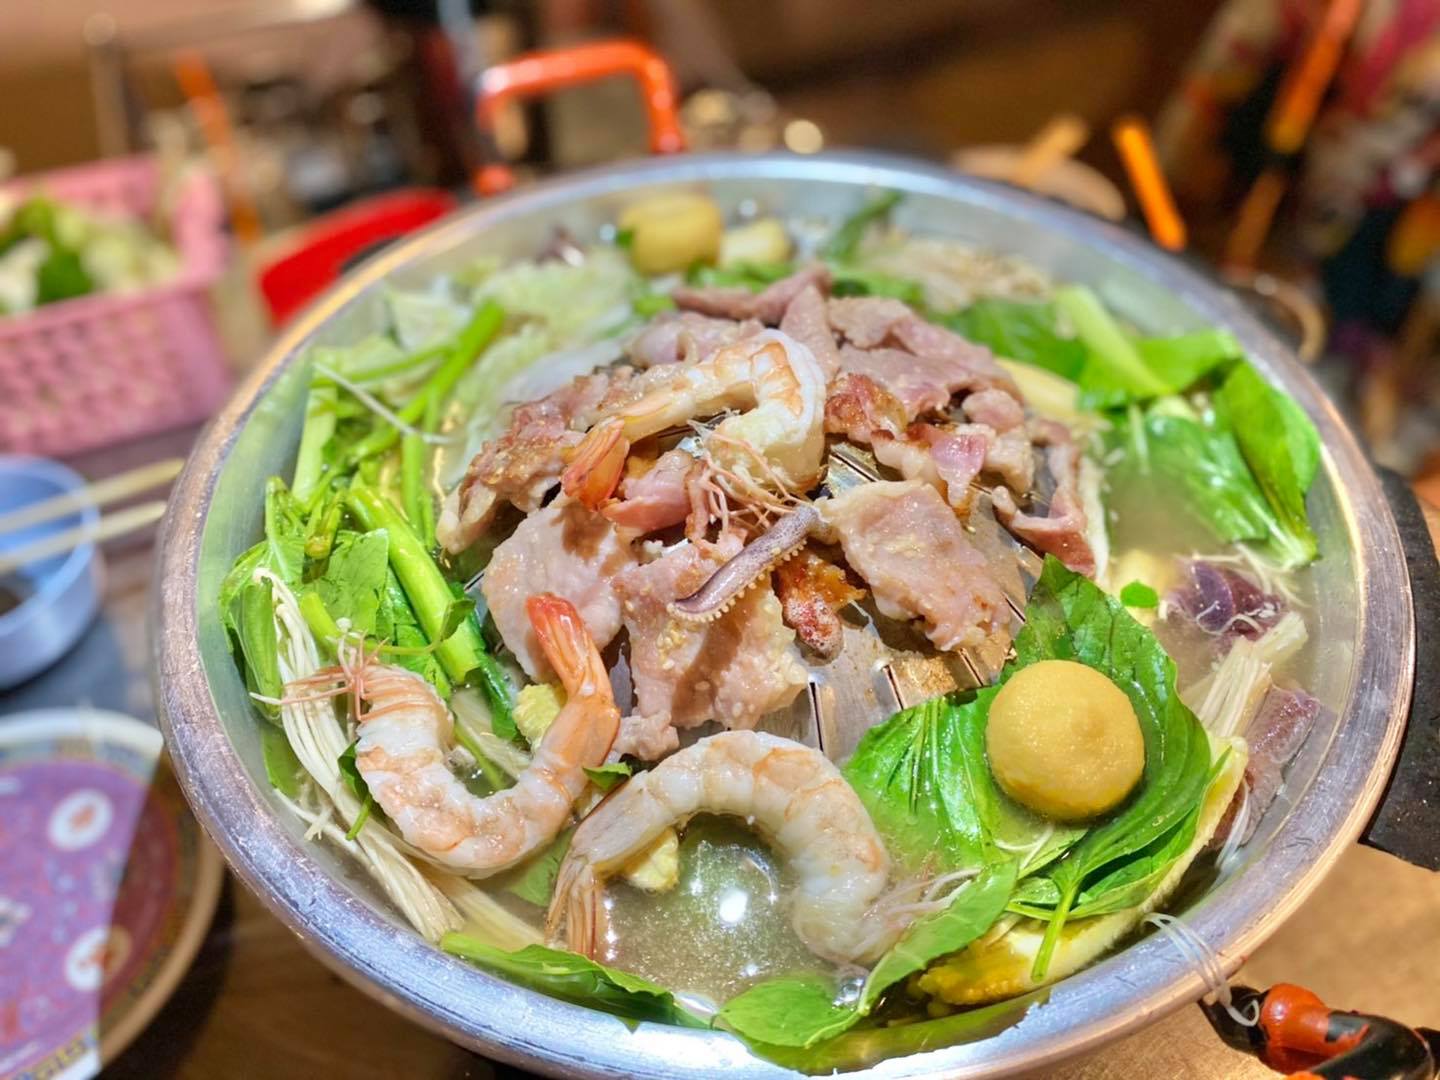 https://thaifoodparadise.com/wp-content/uploads/2020/11/moo_kratha_featured.jpg